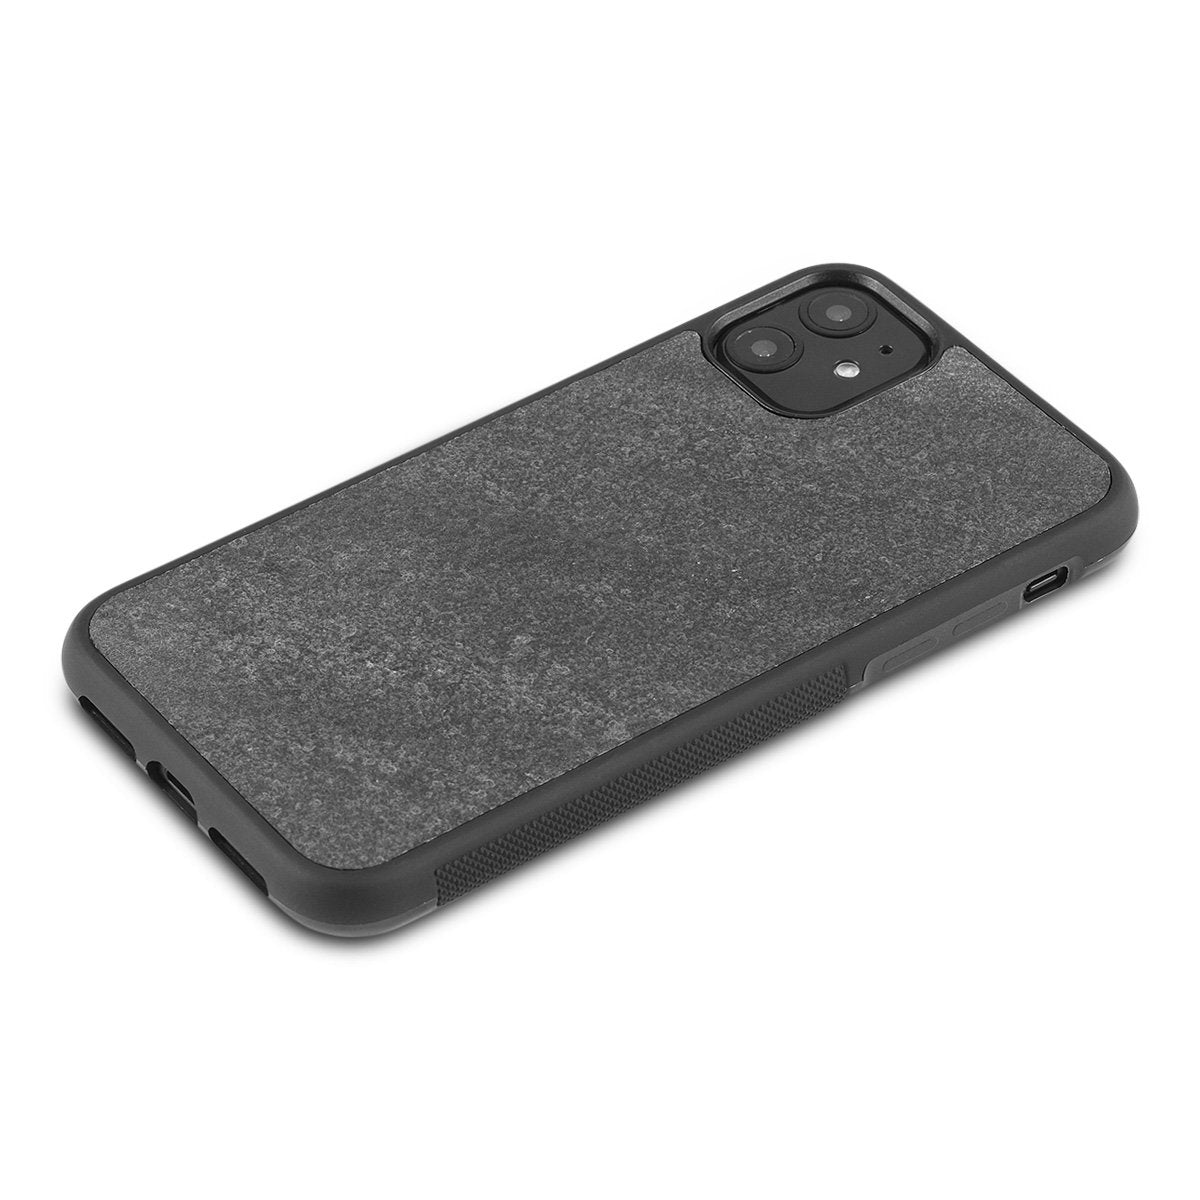 iPhone 11 Pro Max —  Stone Explorer Black Case